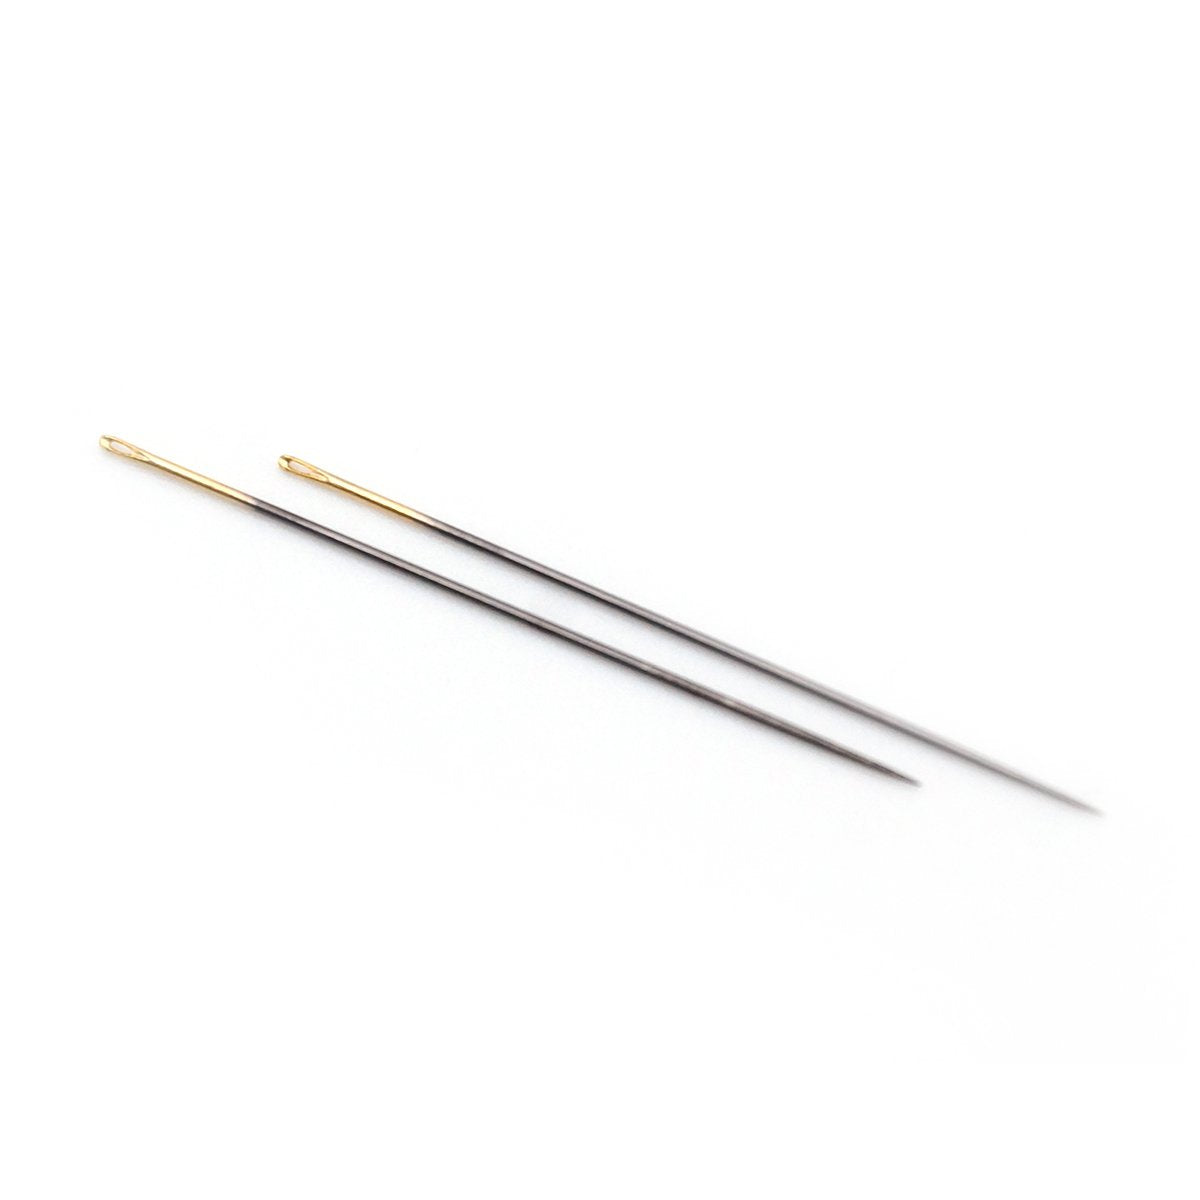 Black Gold Hand Sewing Needles (Applique/Sharps) No. 9